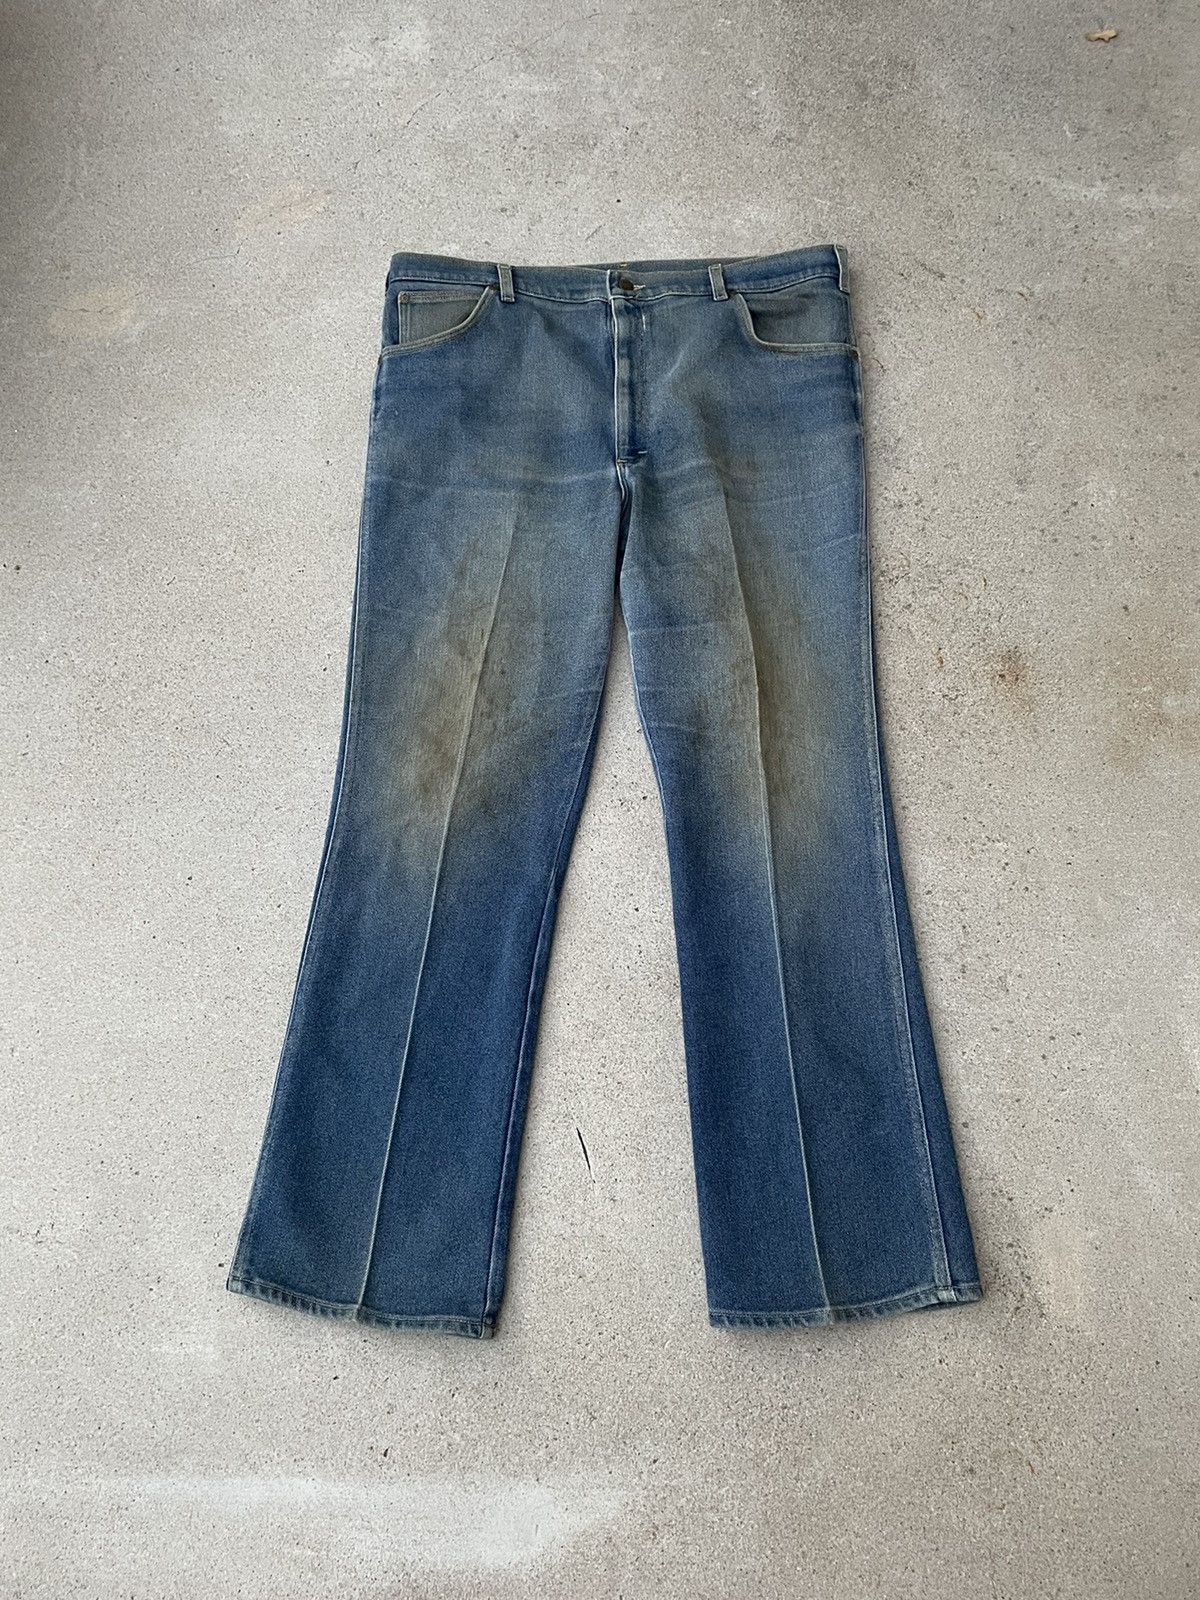 Vintage Vintage 70s Lee Bootcut Distressed Mud Wash Jeans Mens 40x32 Size US 40 / EU 56 - 1 Preview